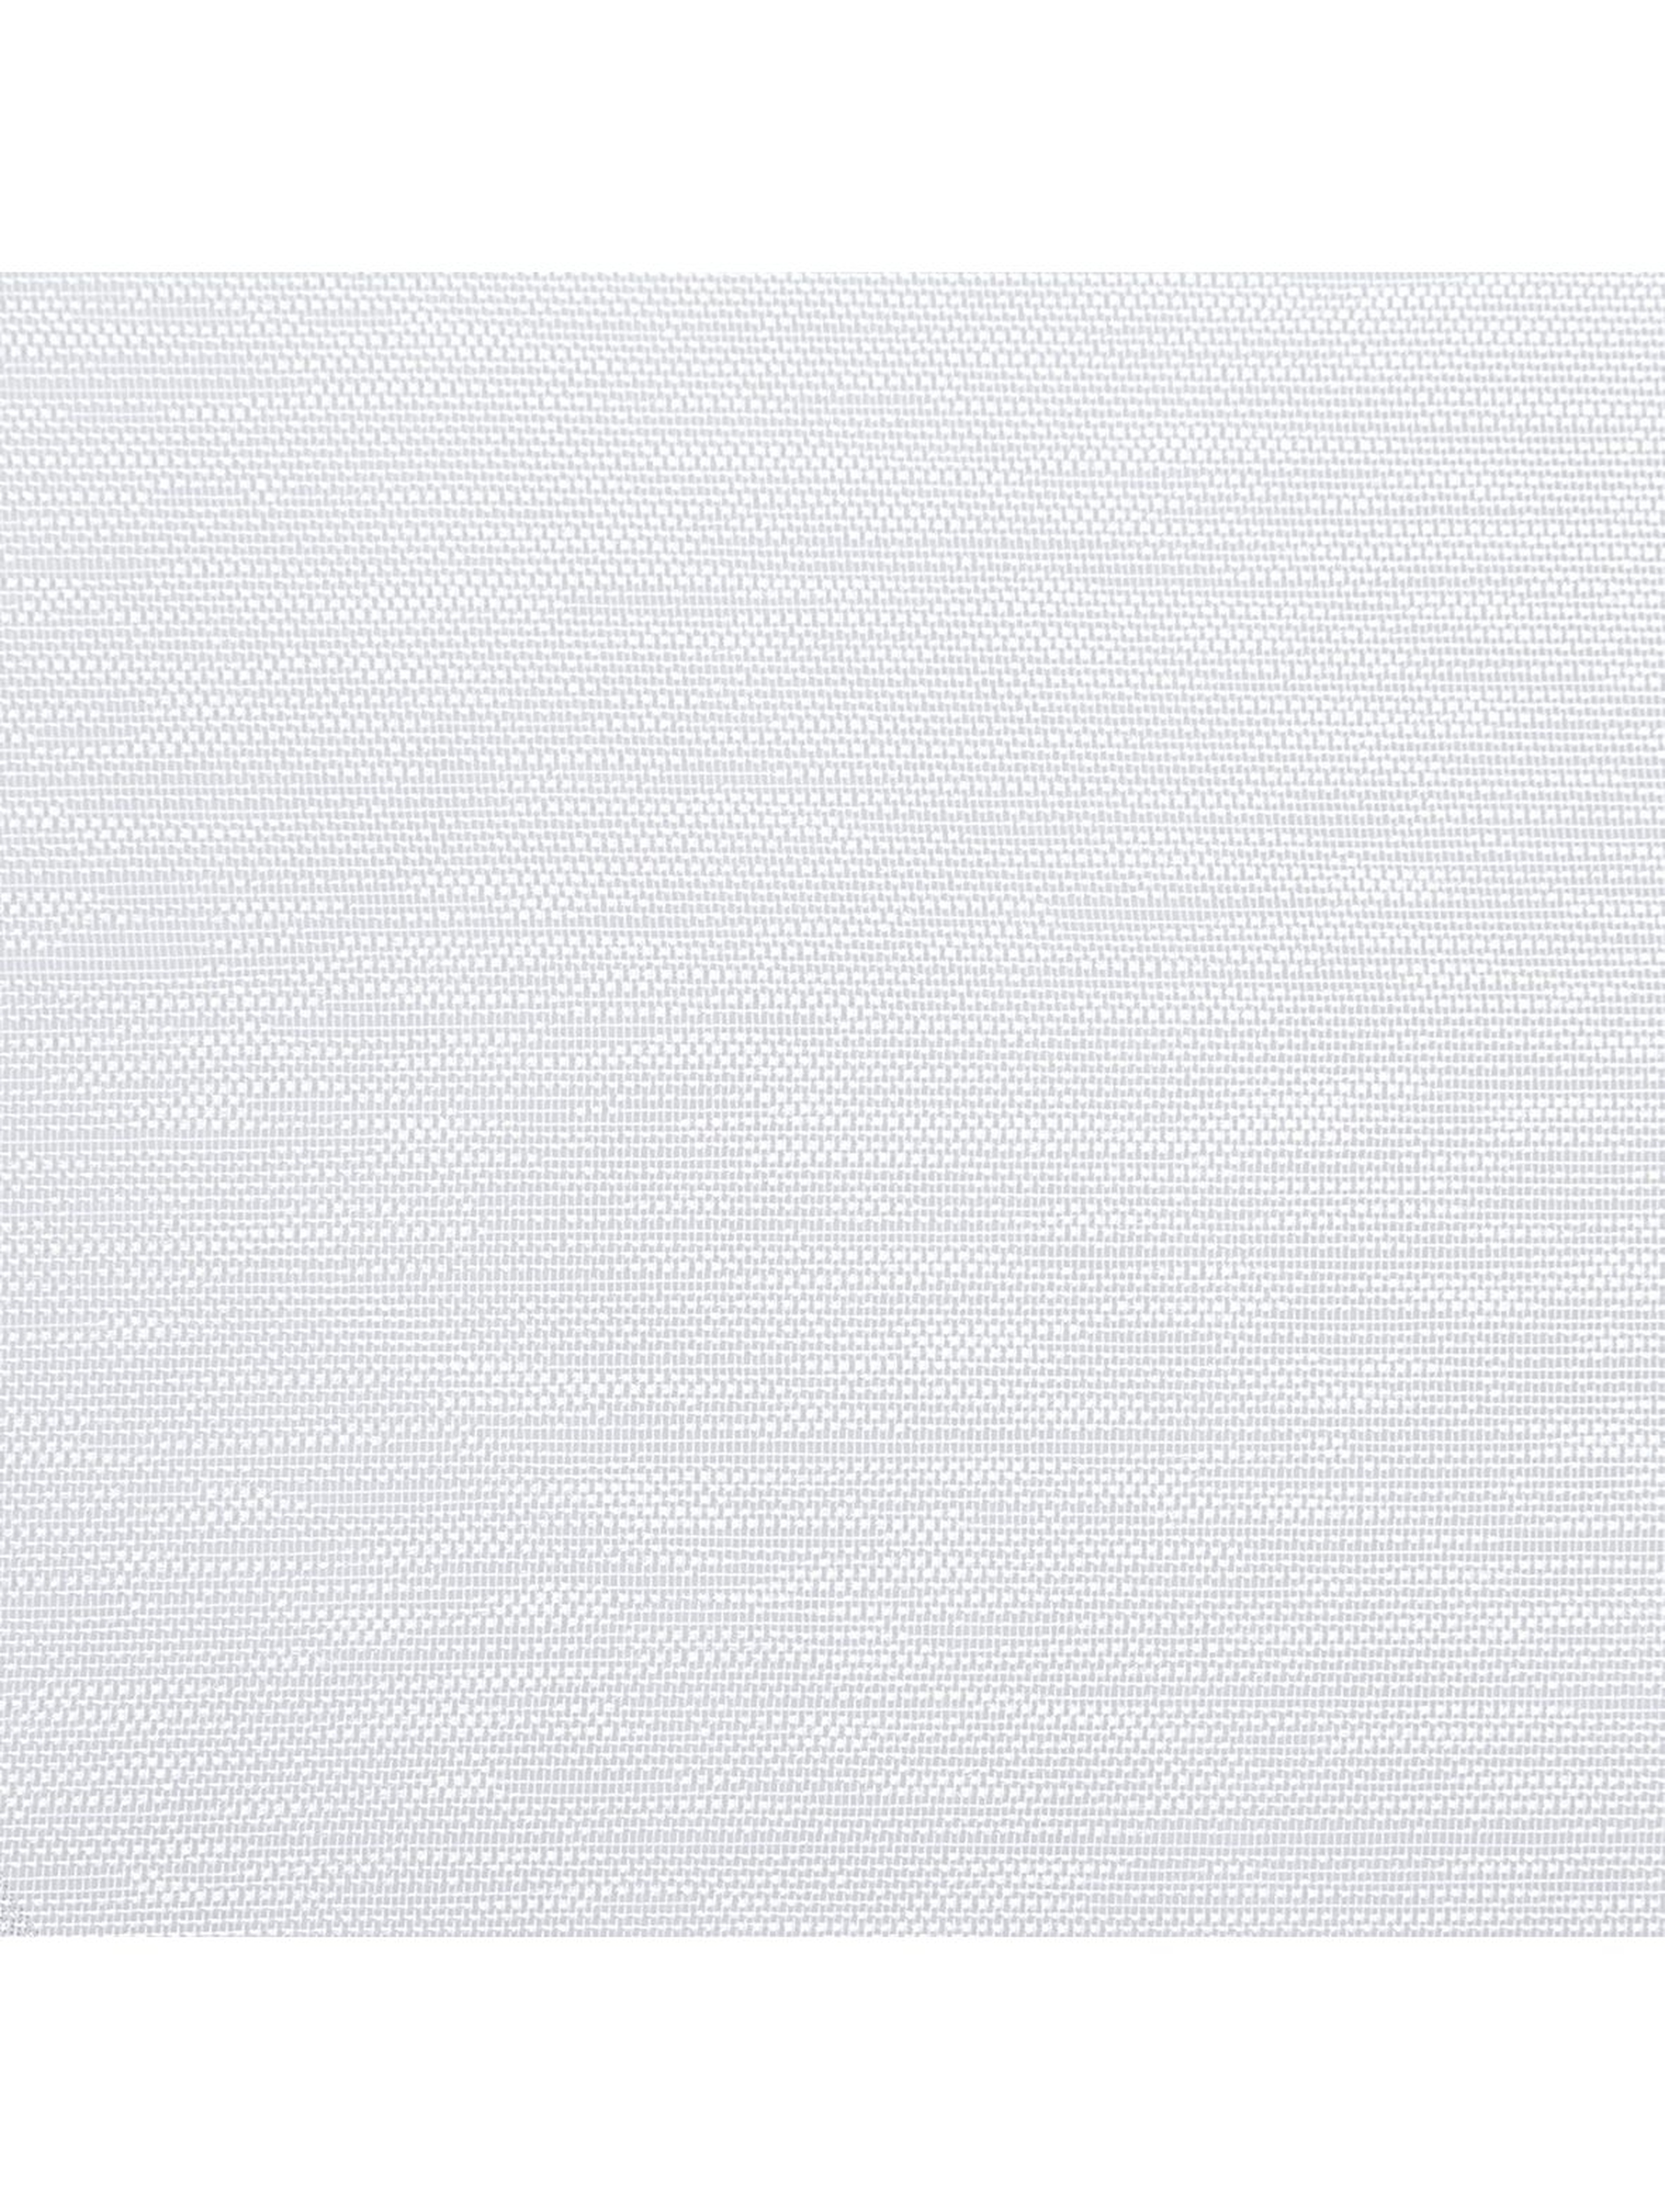 Firana gładka biała 140 x 250 cm